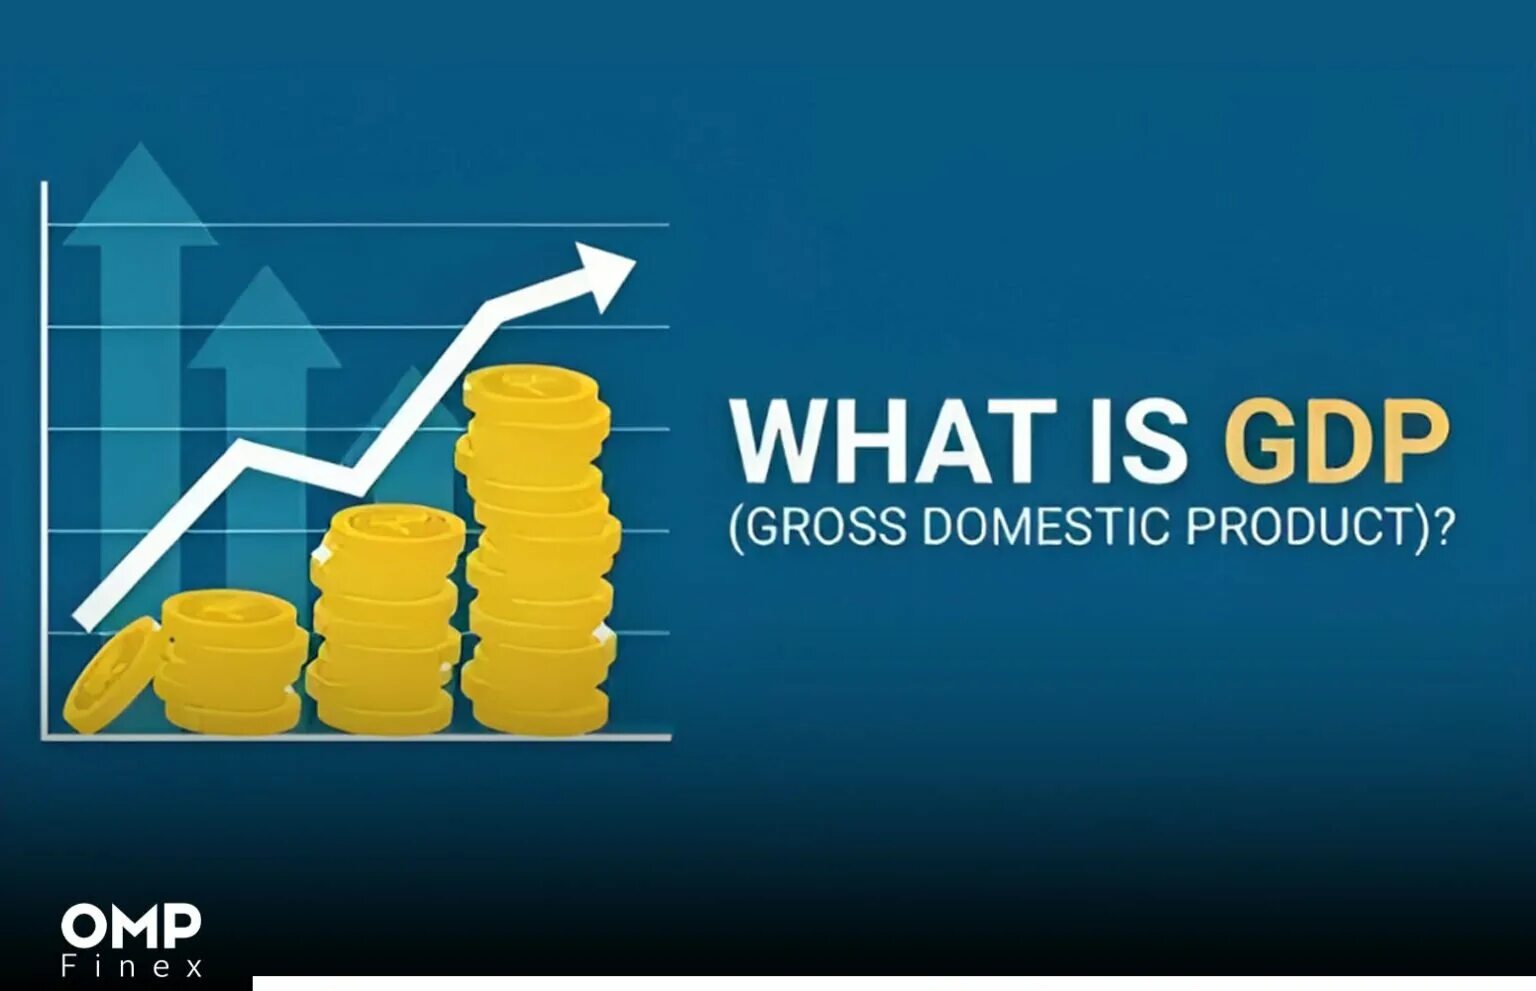 Gross domestic product. Gross domestic product (GDP). What is GDP. Gross domestic product gross domestic product. GDP картинки.